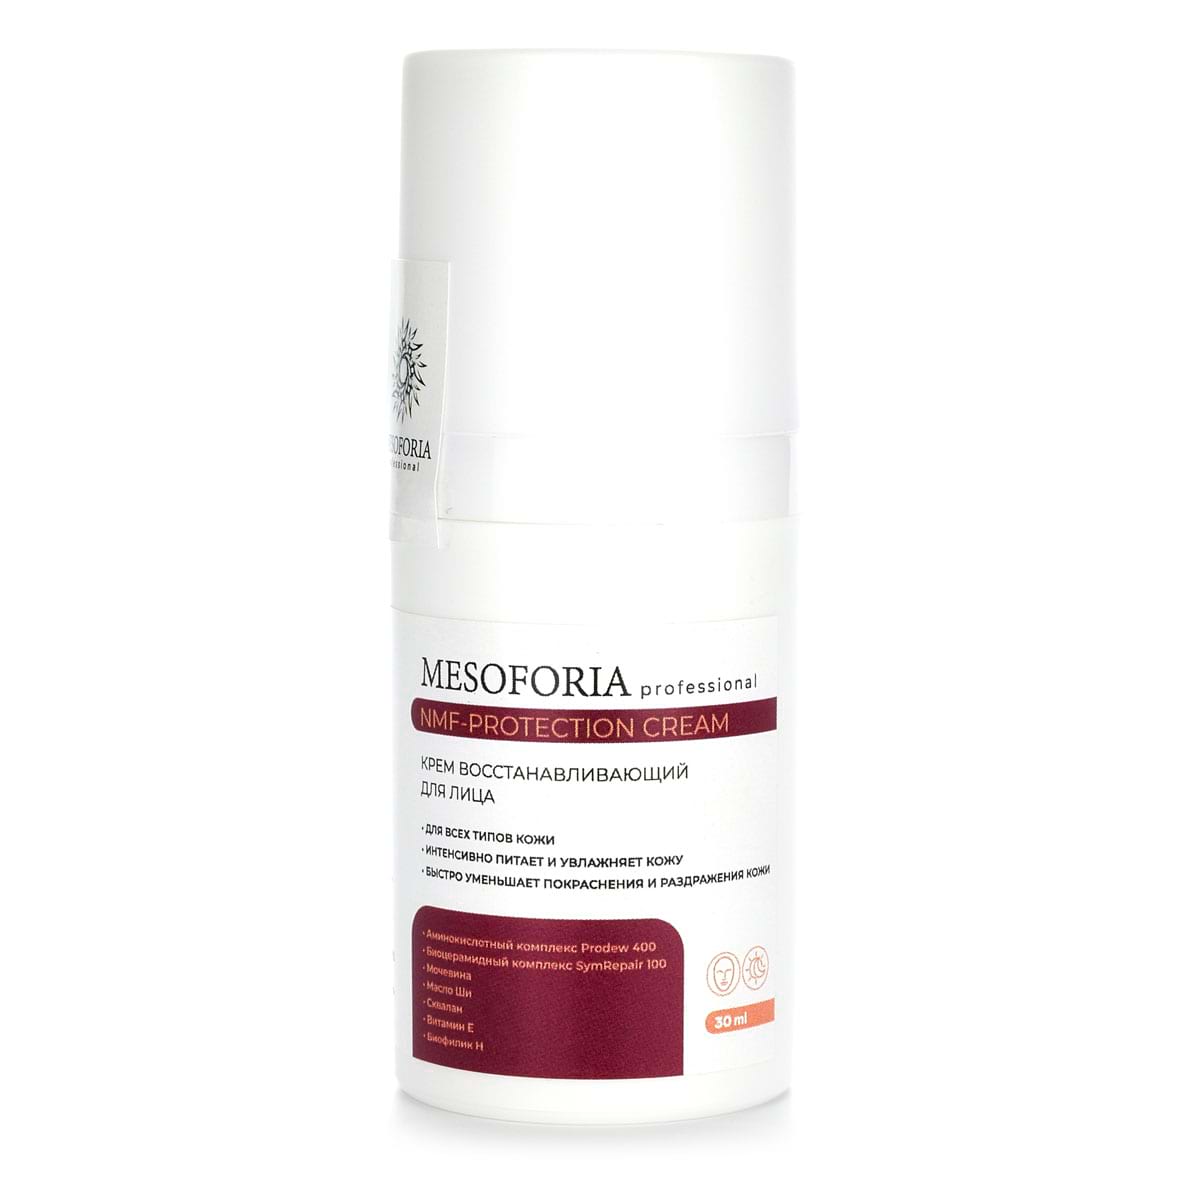 NMF-Protection Cream / Крем восстанавливающий для лица, Mesoforia (Мезофория) – 30 мл